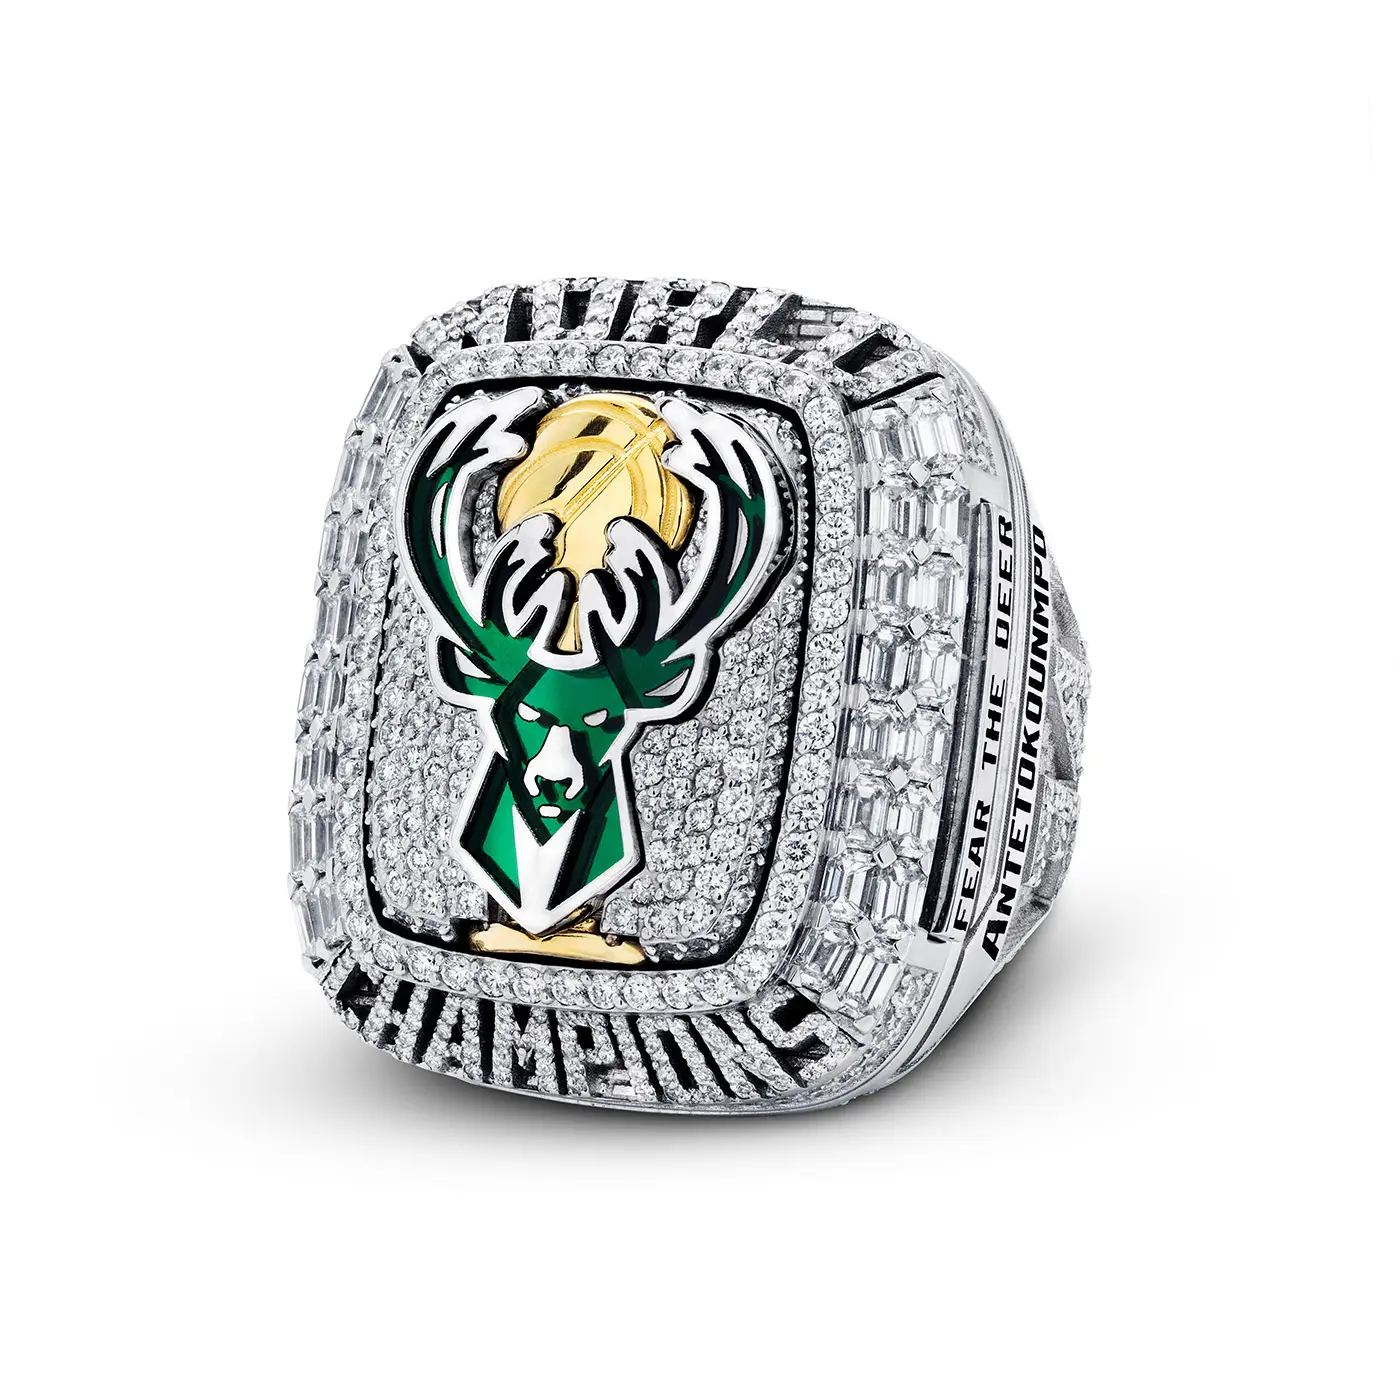 2021 Bucks MVP Championship Ring gold/silver plated ring championship ring display box